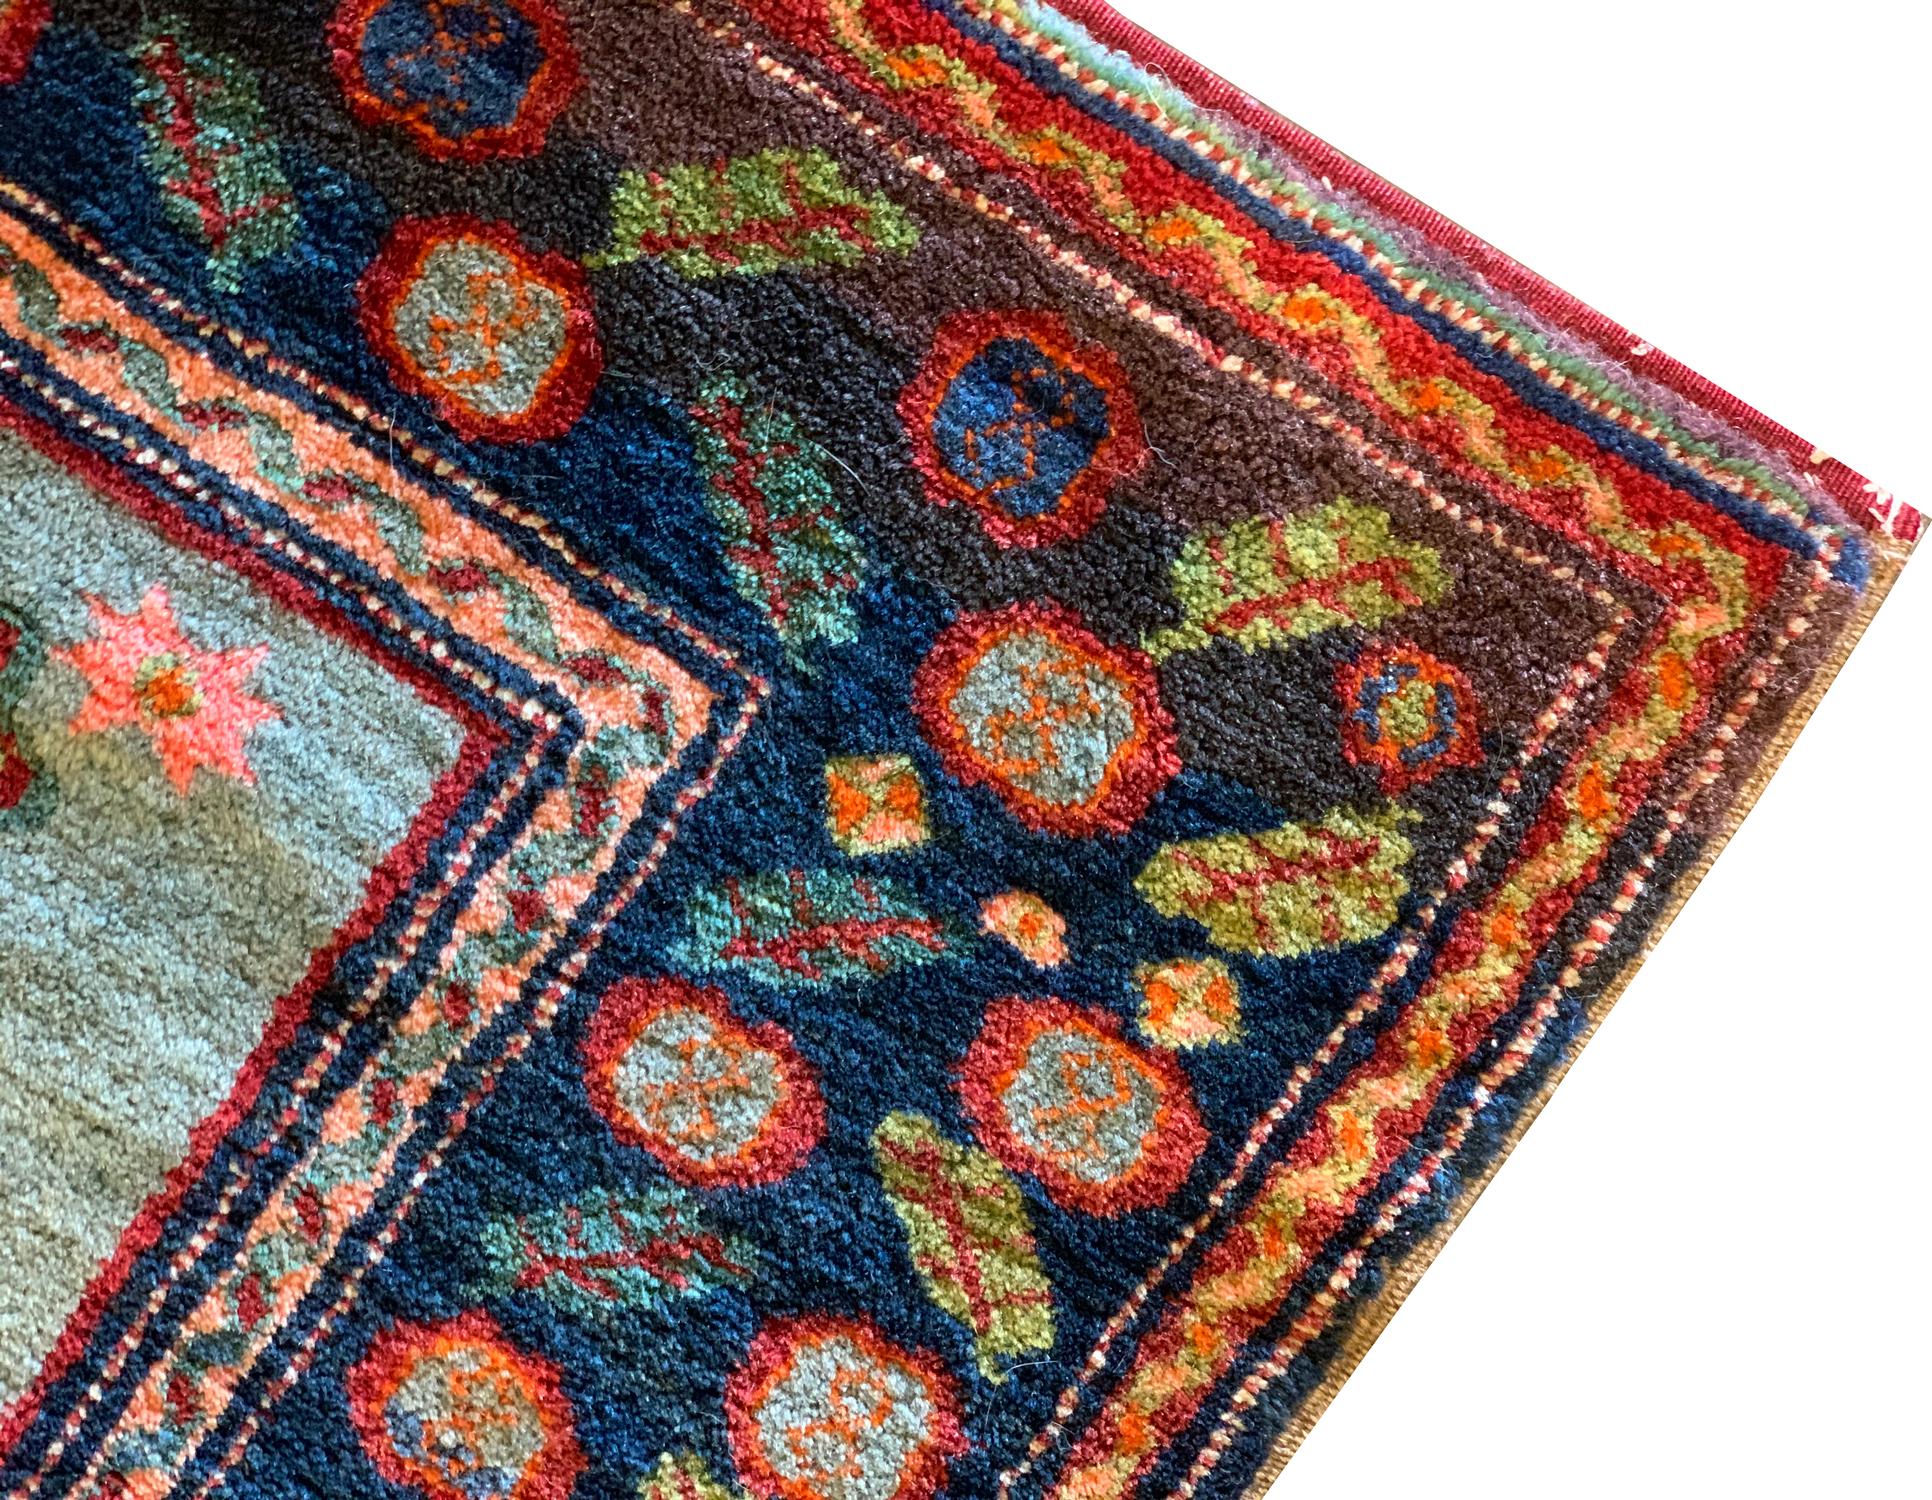 armenian carpet symbols